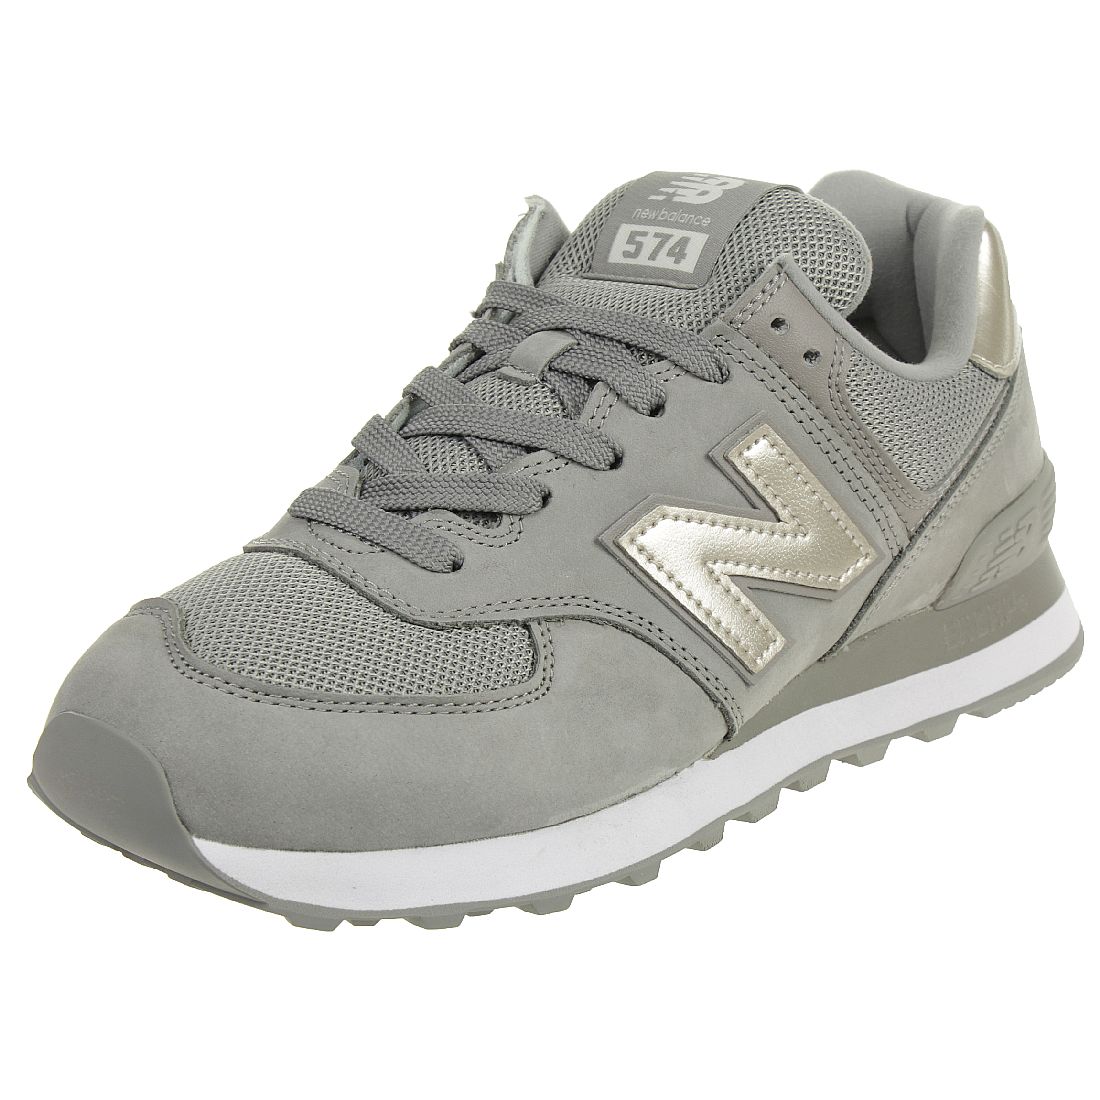 New Balance WL574 WNK Classic Sneaker Damen Schuhe grau